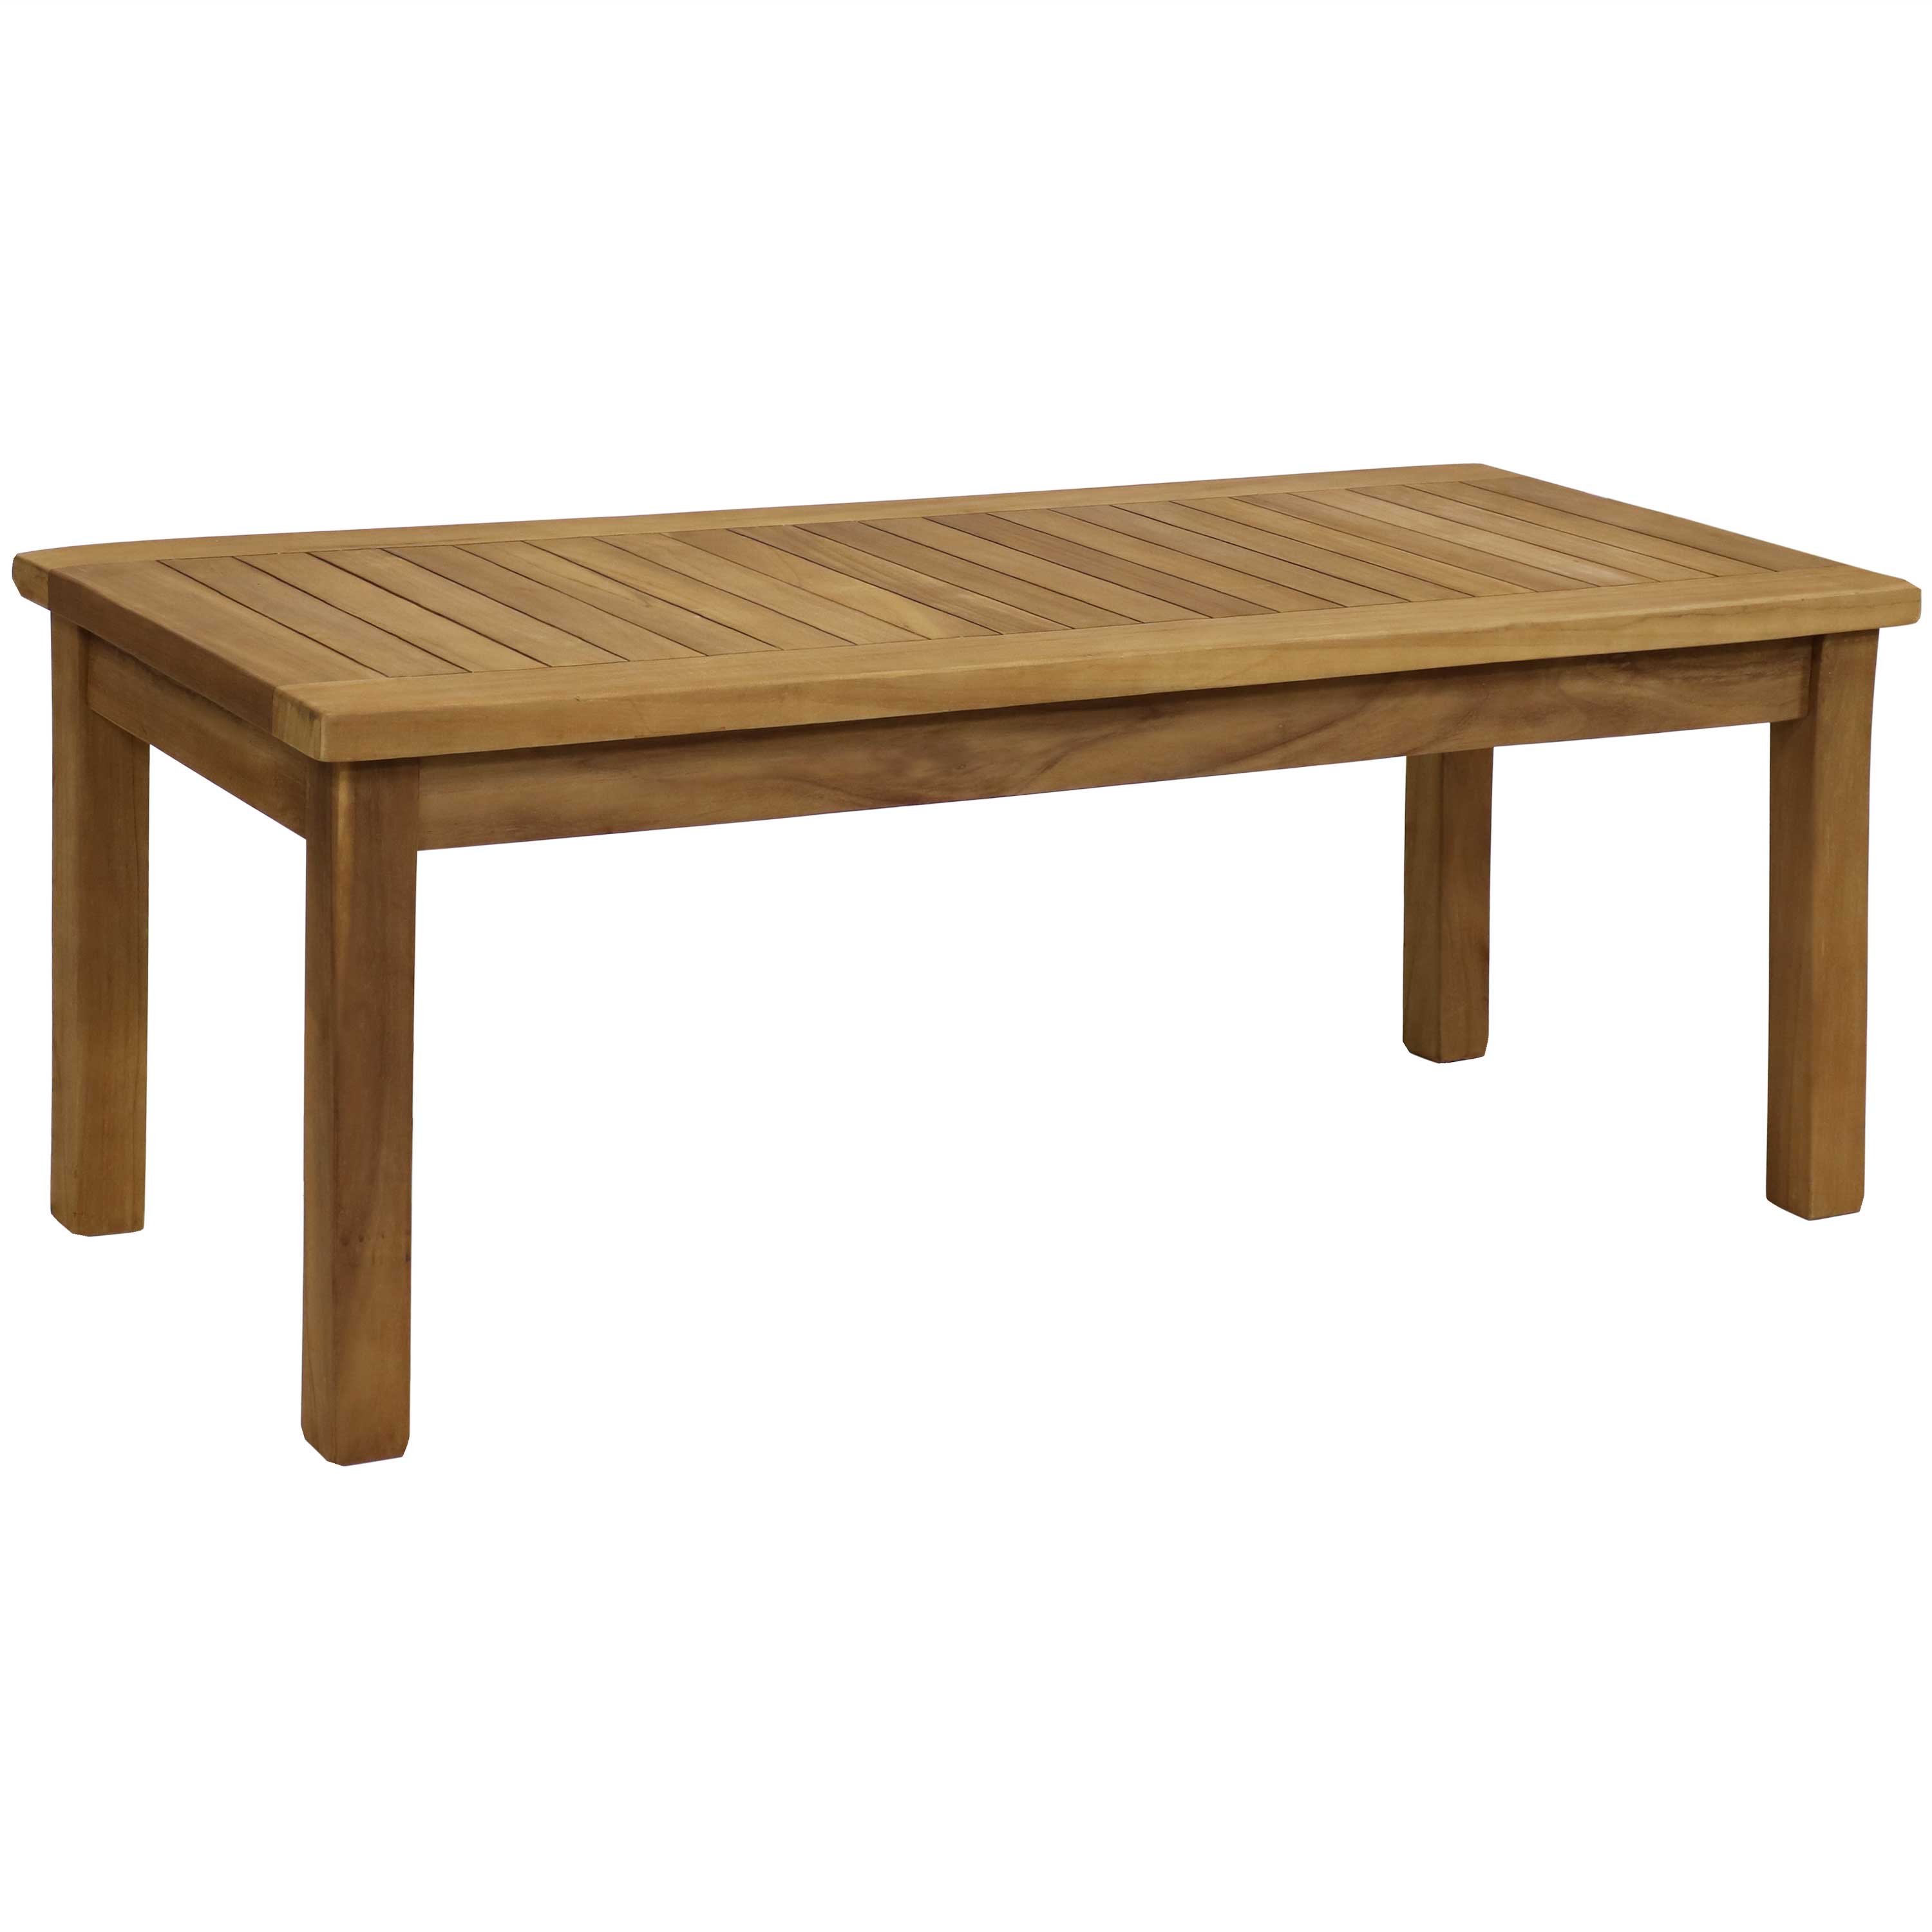 Sunndyaze Teak Wooden Outdoor Patio Coffee Table - Stain Finish - 45-Inch